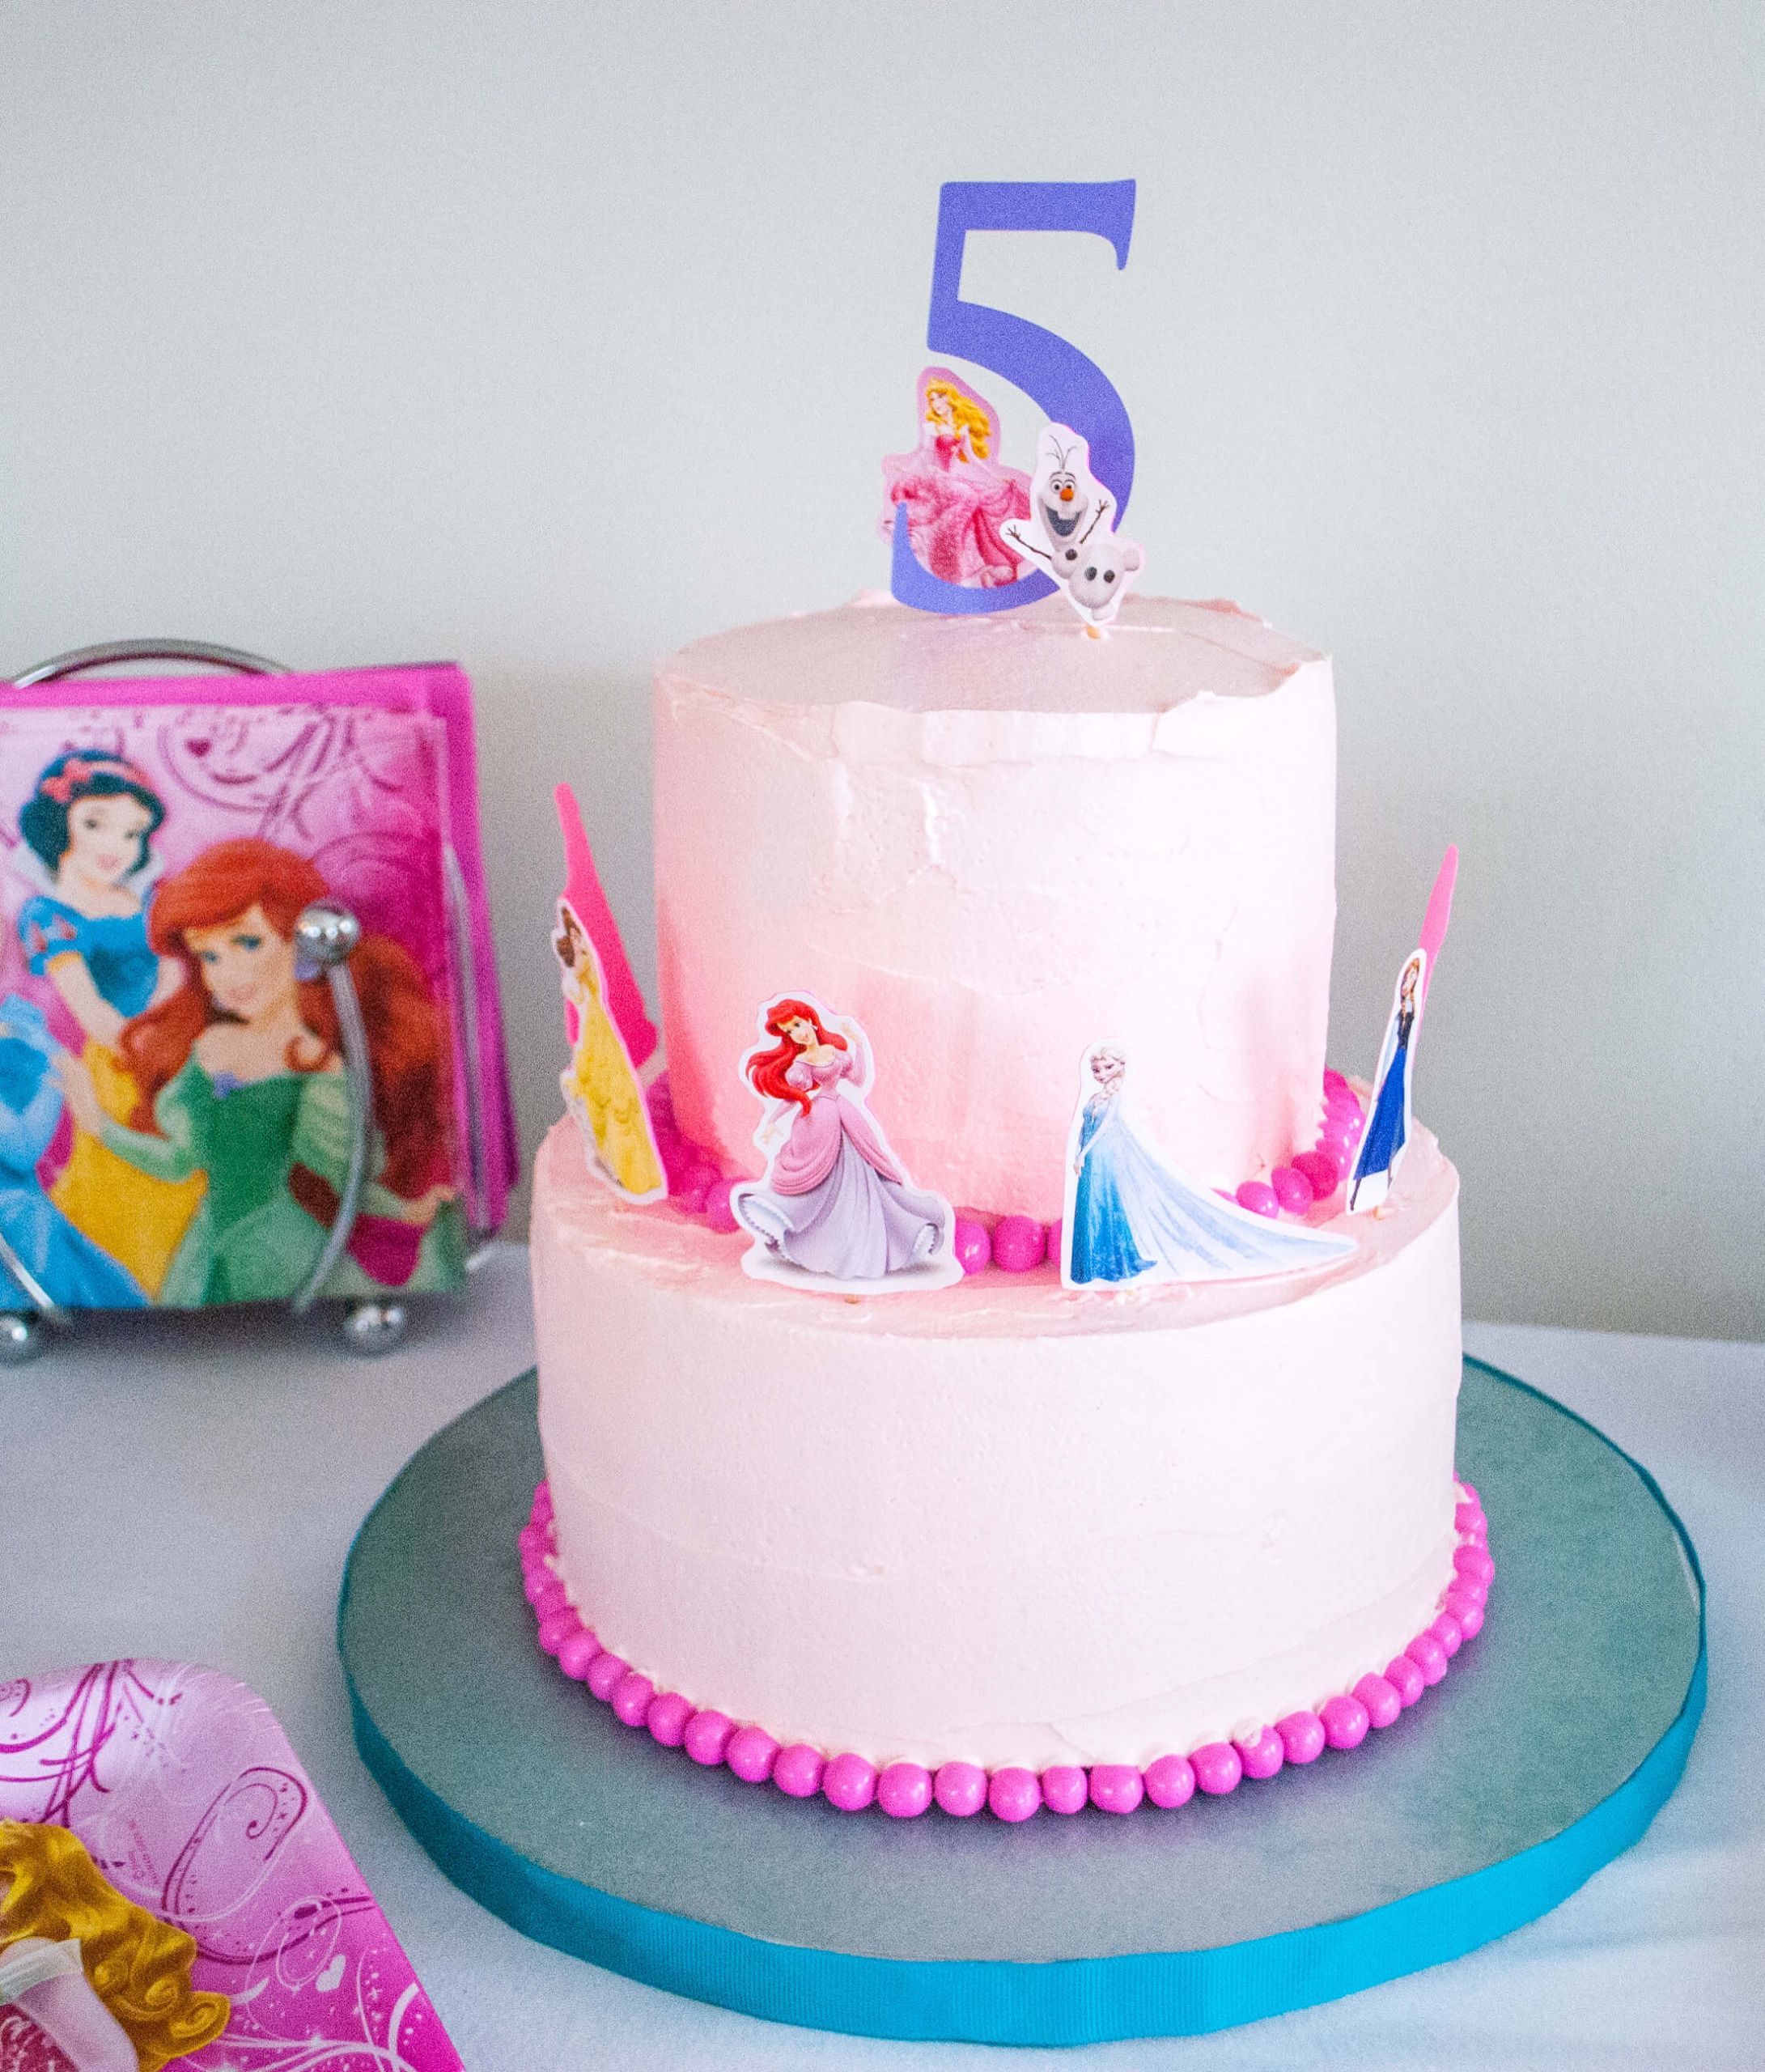 Princess Birthday Cake Ideas
 Make an Easy Disney Princess Birthday Cake Using Stickers